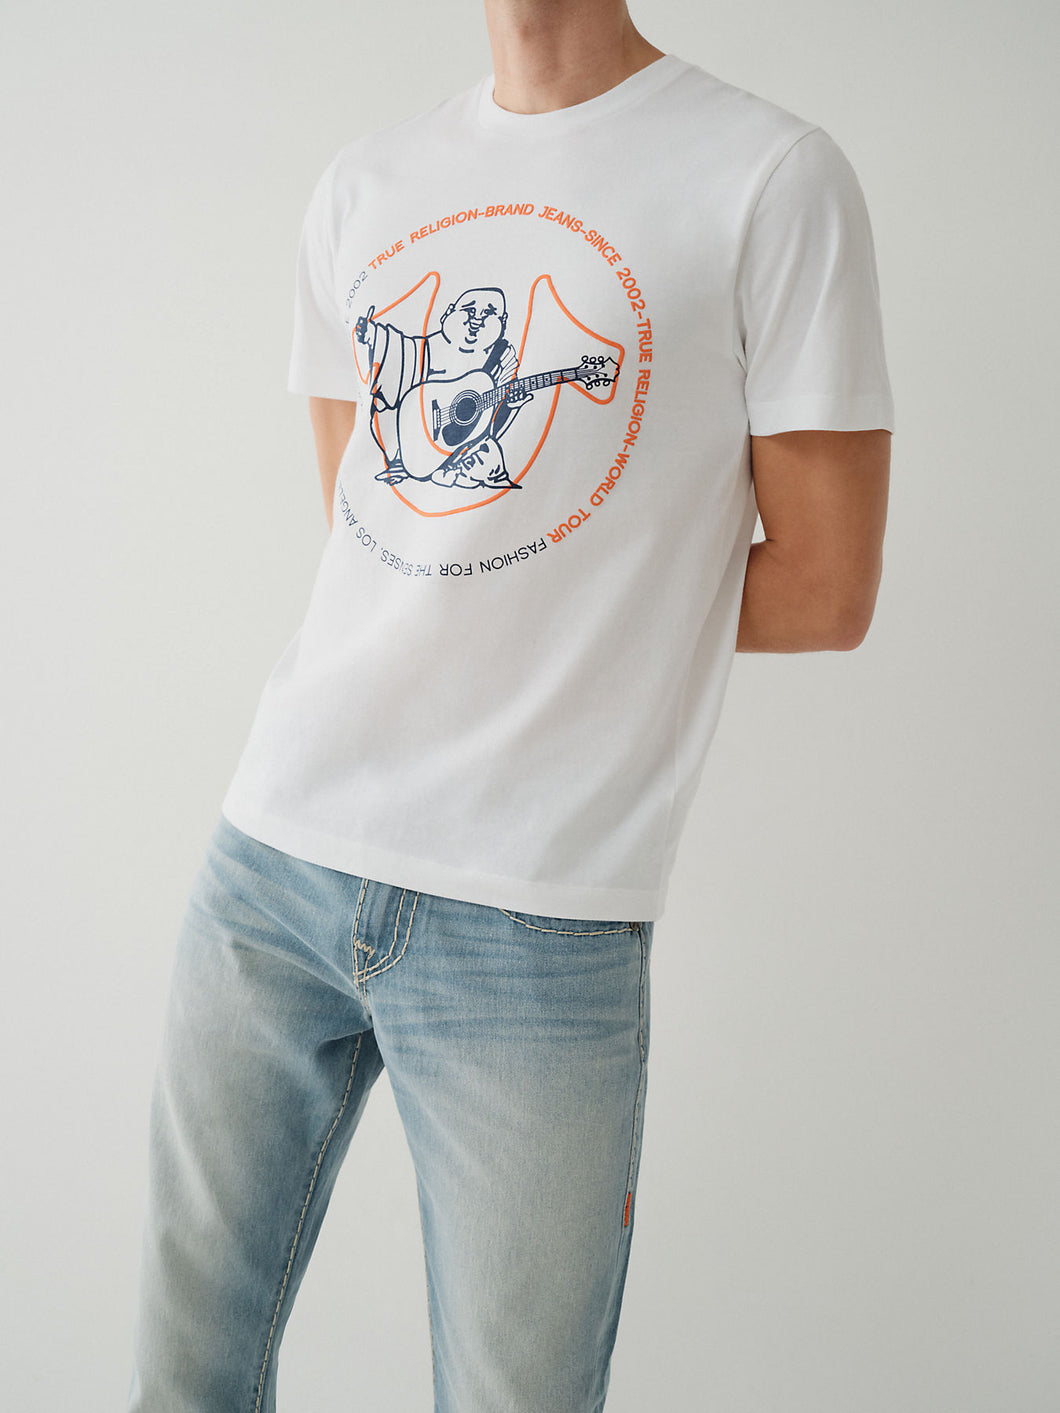 True Religion, Buddha Graphic Design  White T-Shirt